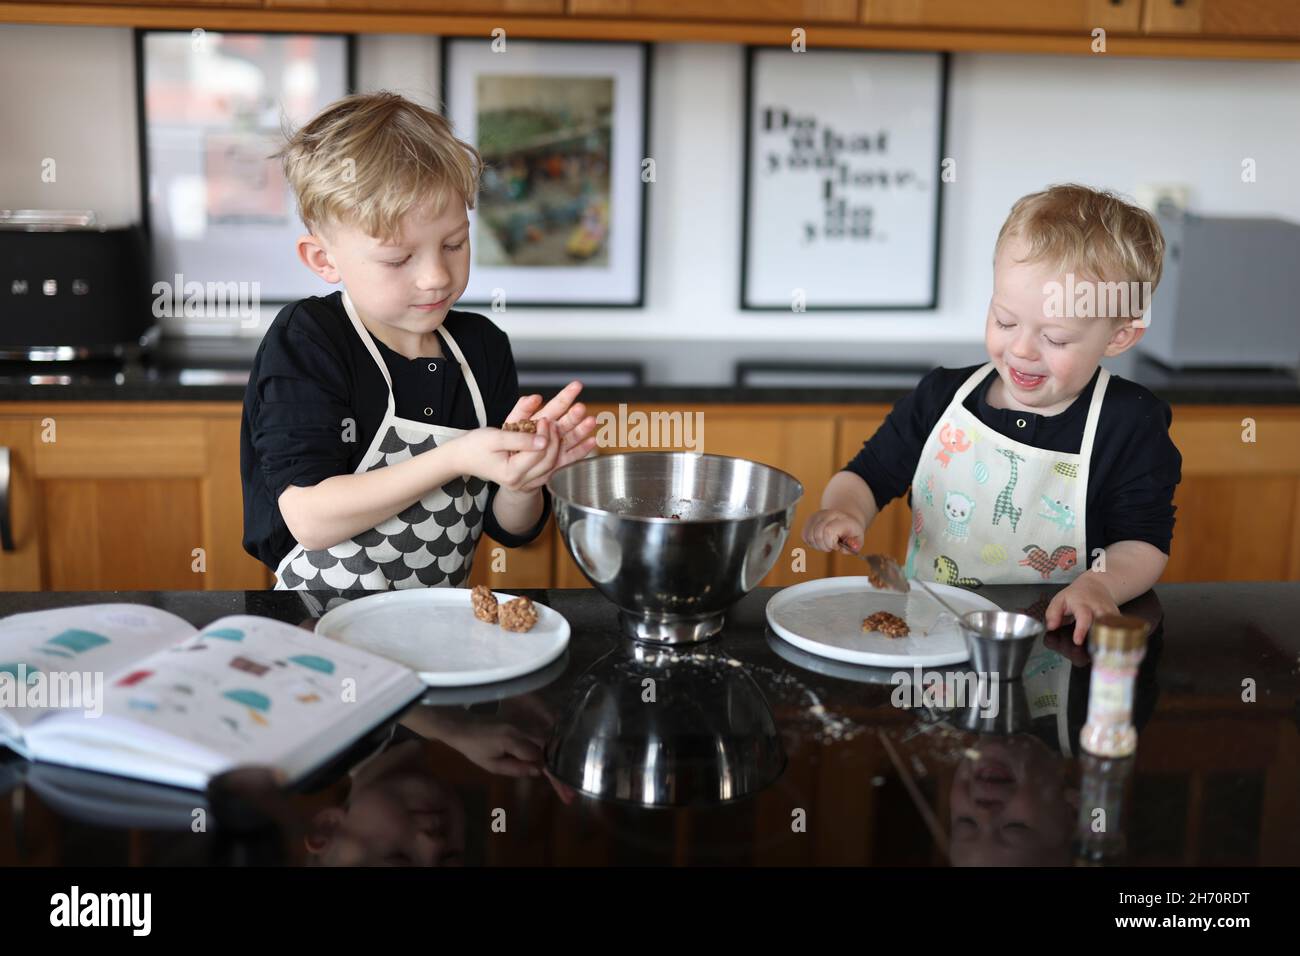 Boys baking together Stock Photo